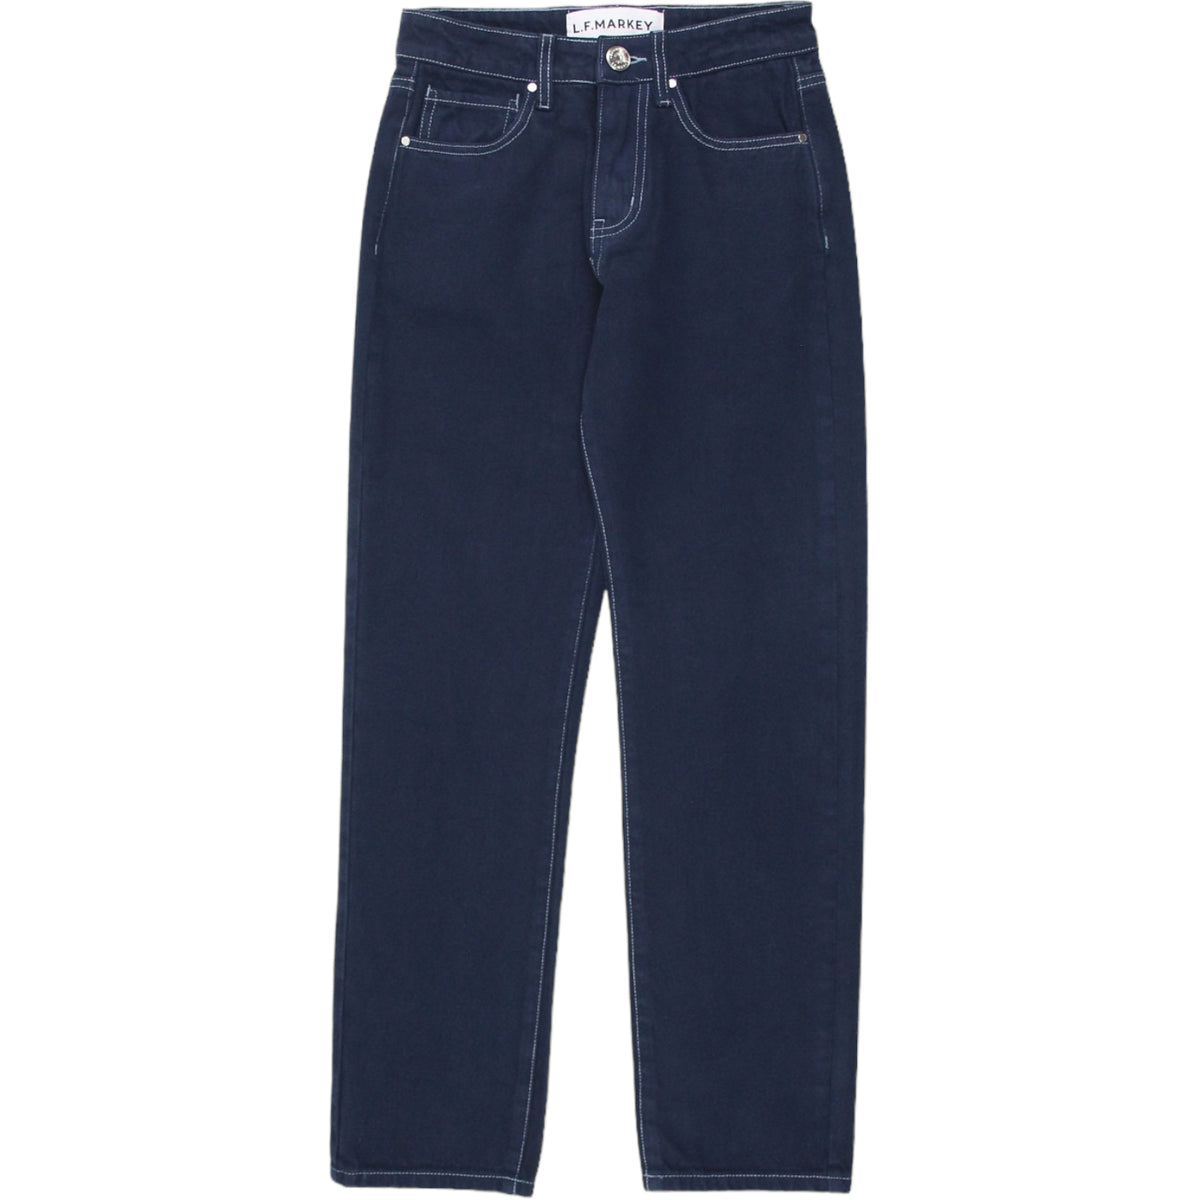 LF Markey Navy Denim Jeans